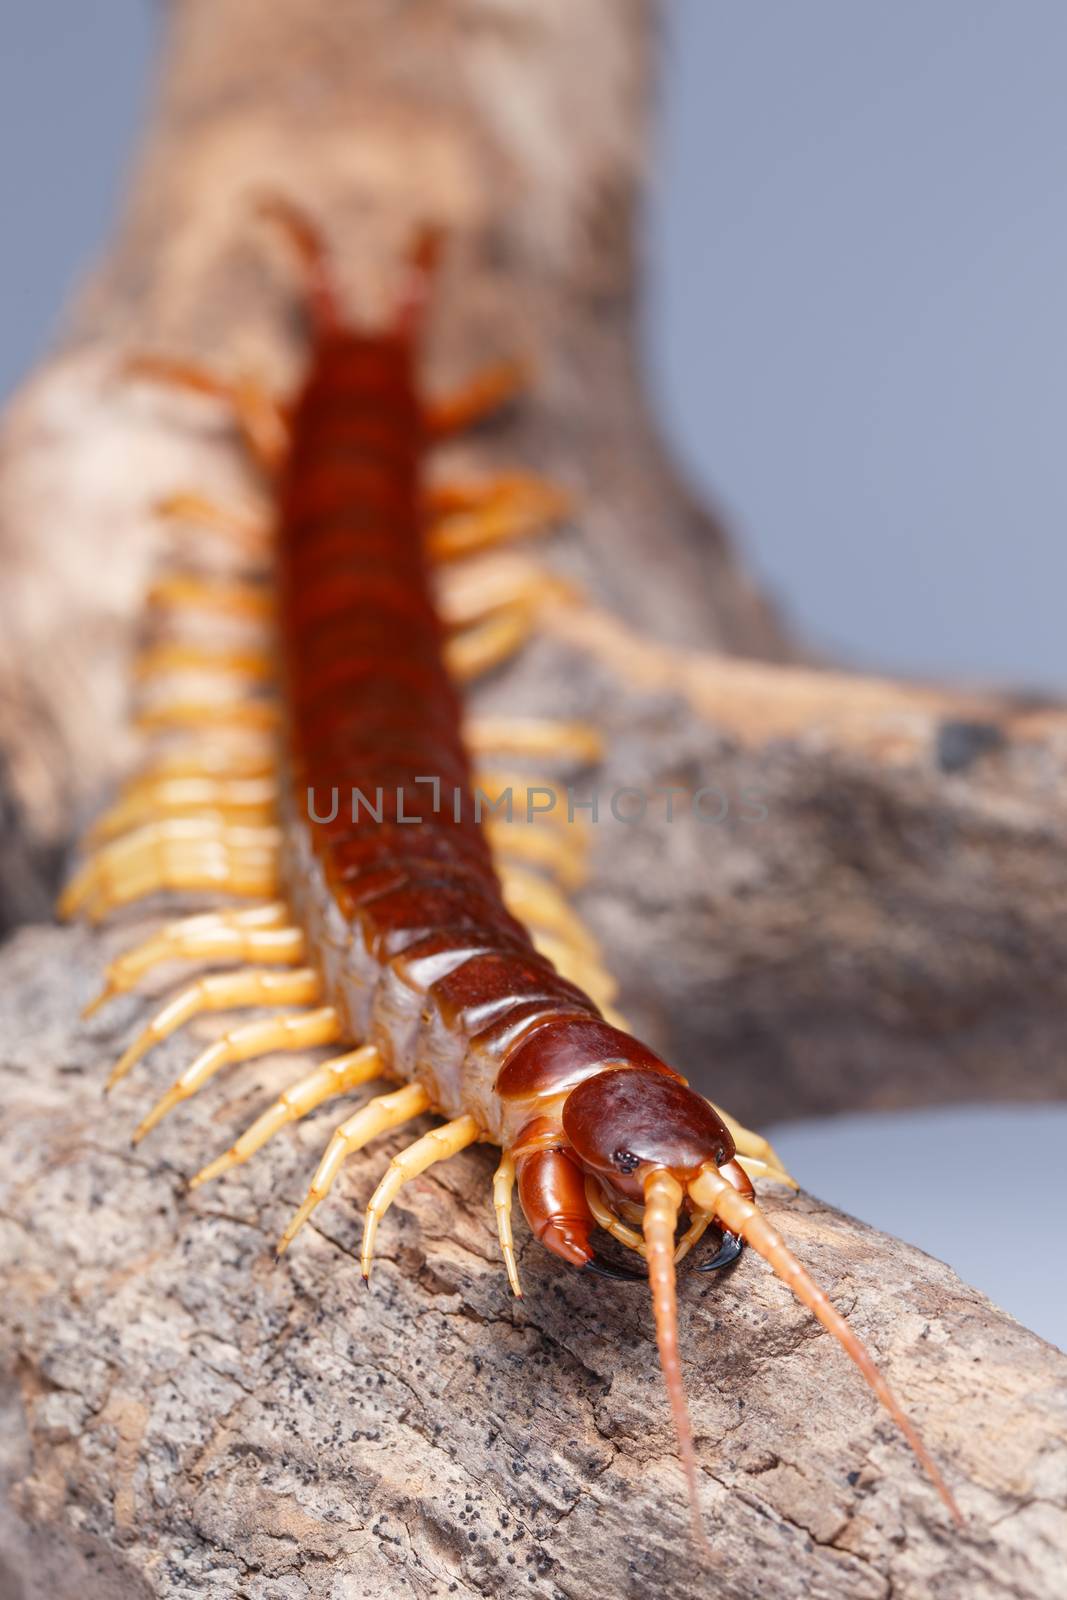 centipede by Natstocker